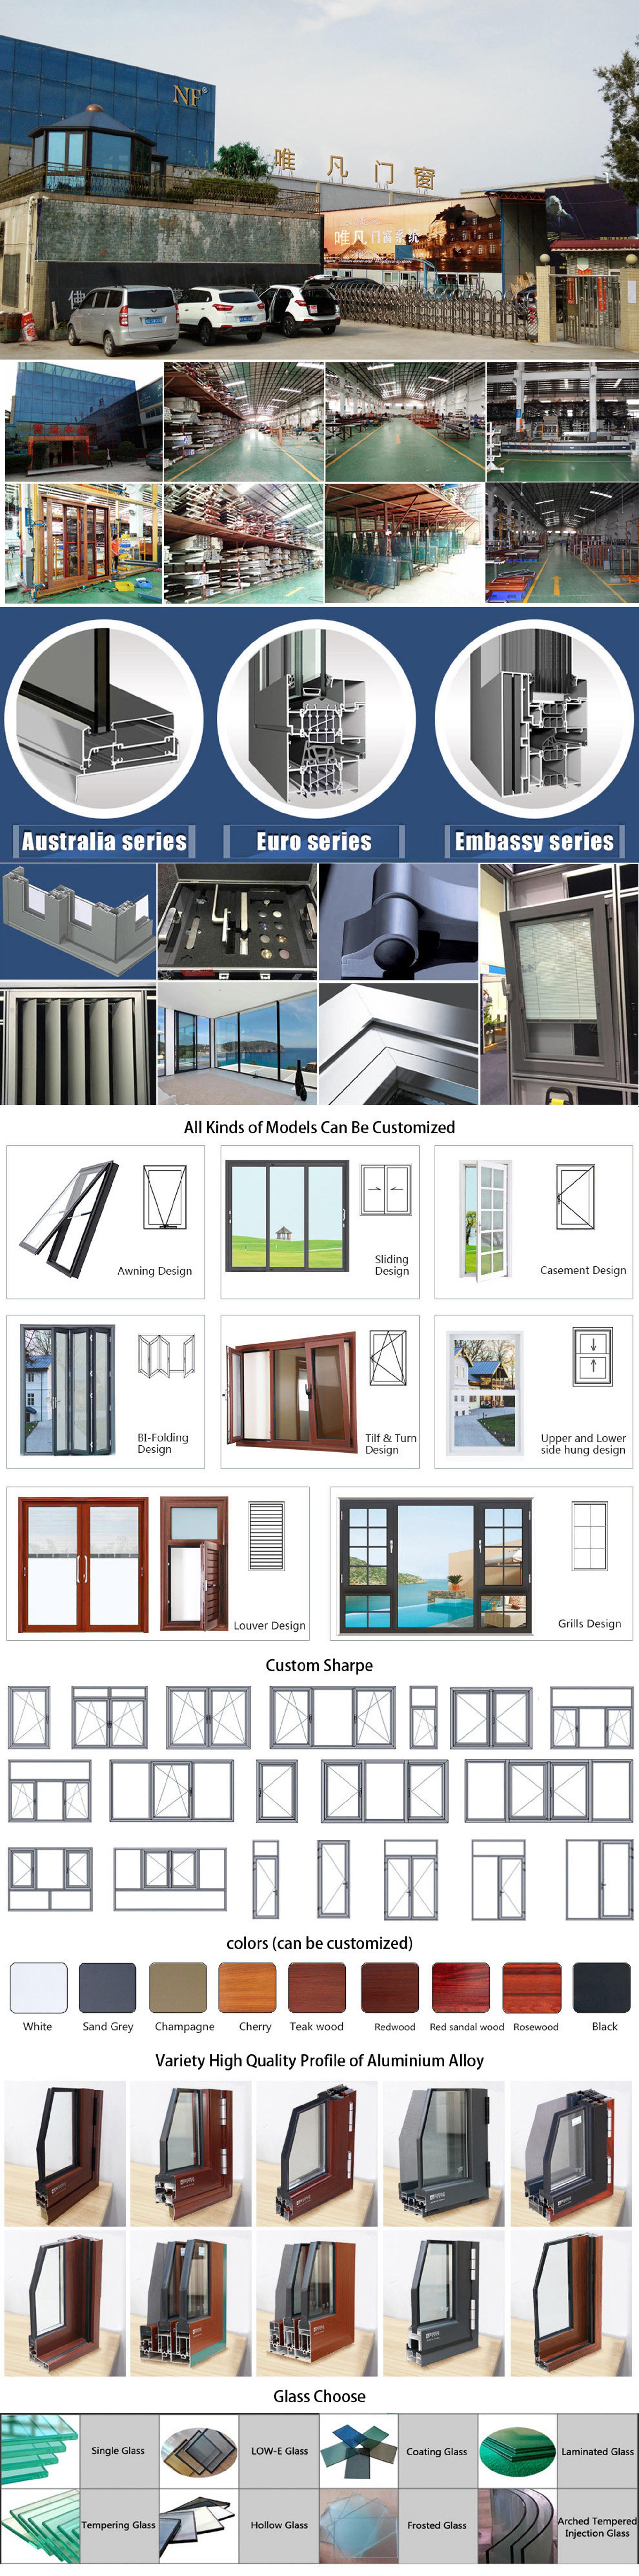 Energy efficient fiberglass windows with grill design